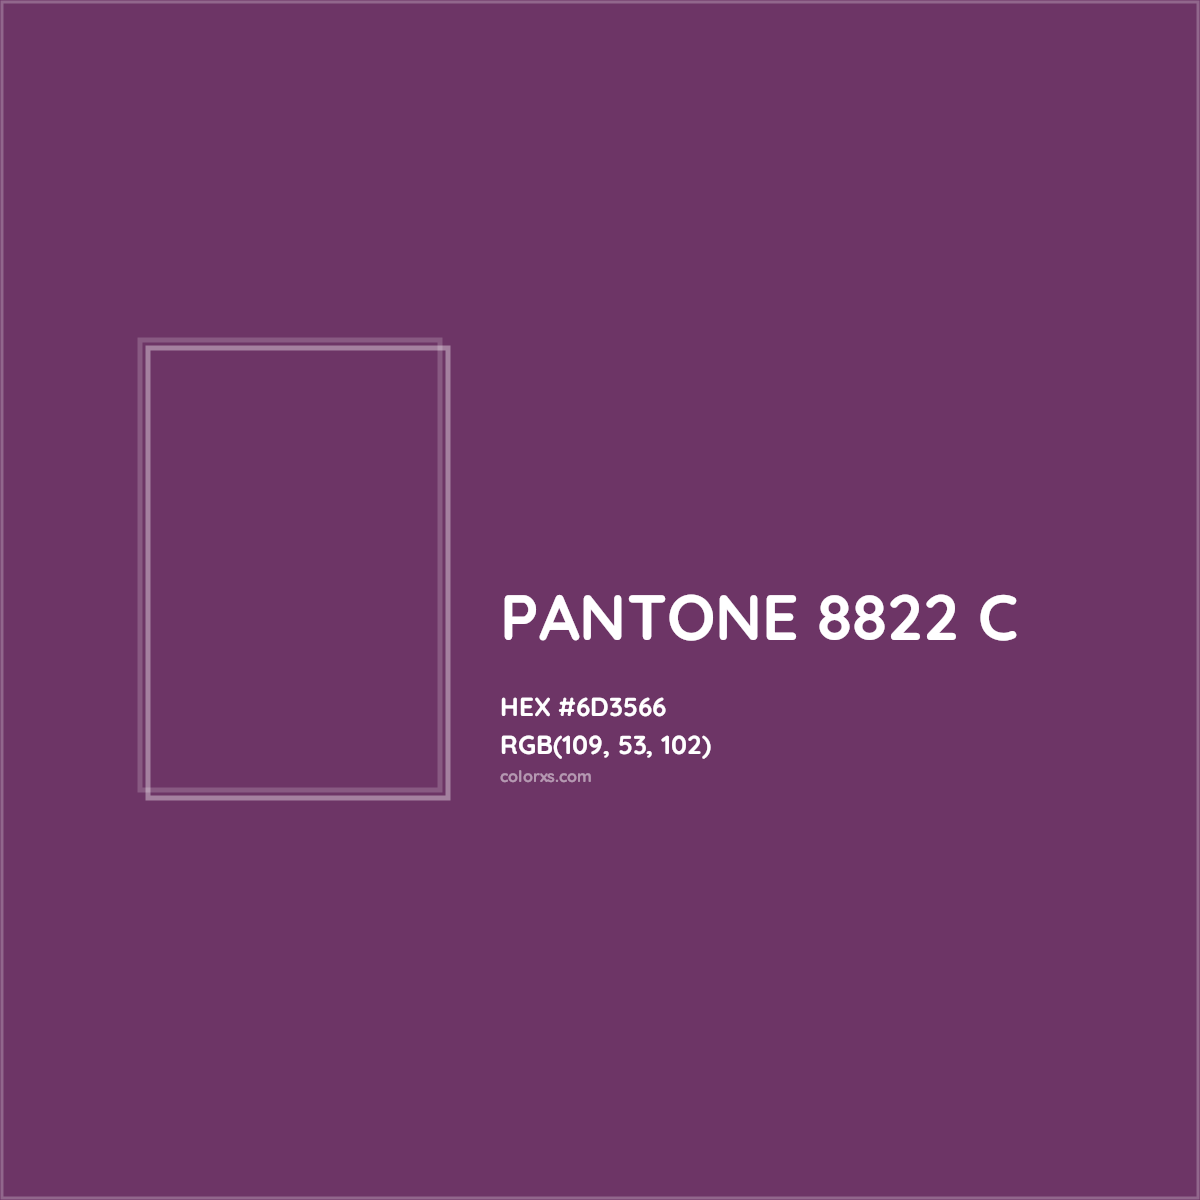 HEX #6D3566 PANTONE 8822 C CMS Pantone PMS - Color Code